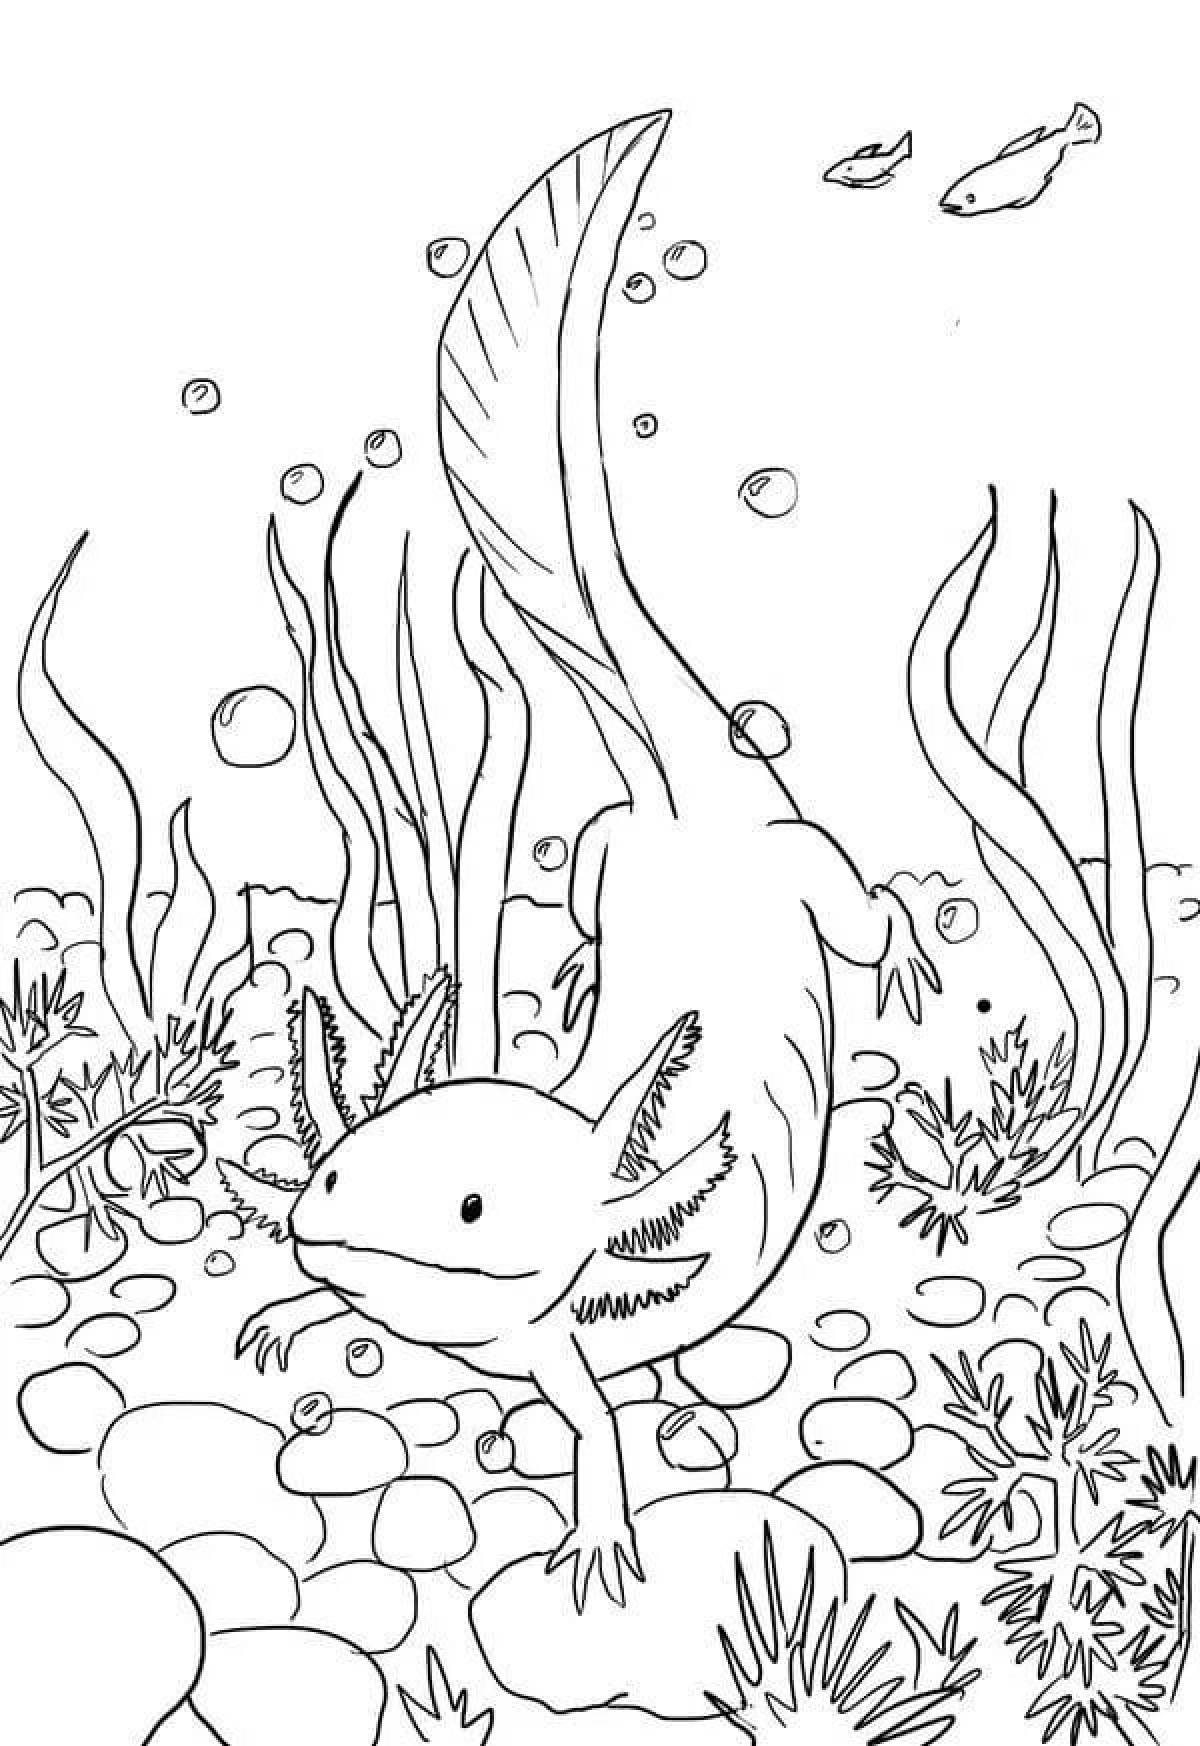 Sweet axolotl coloring